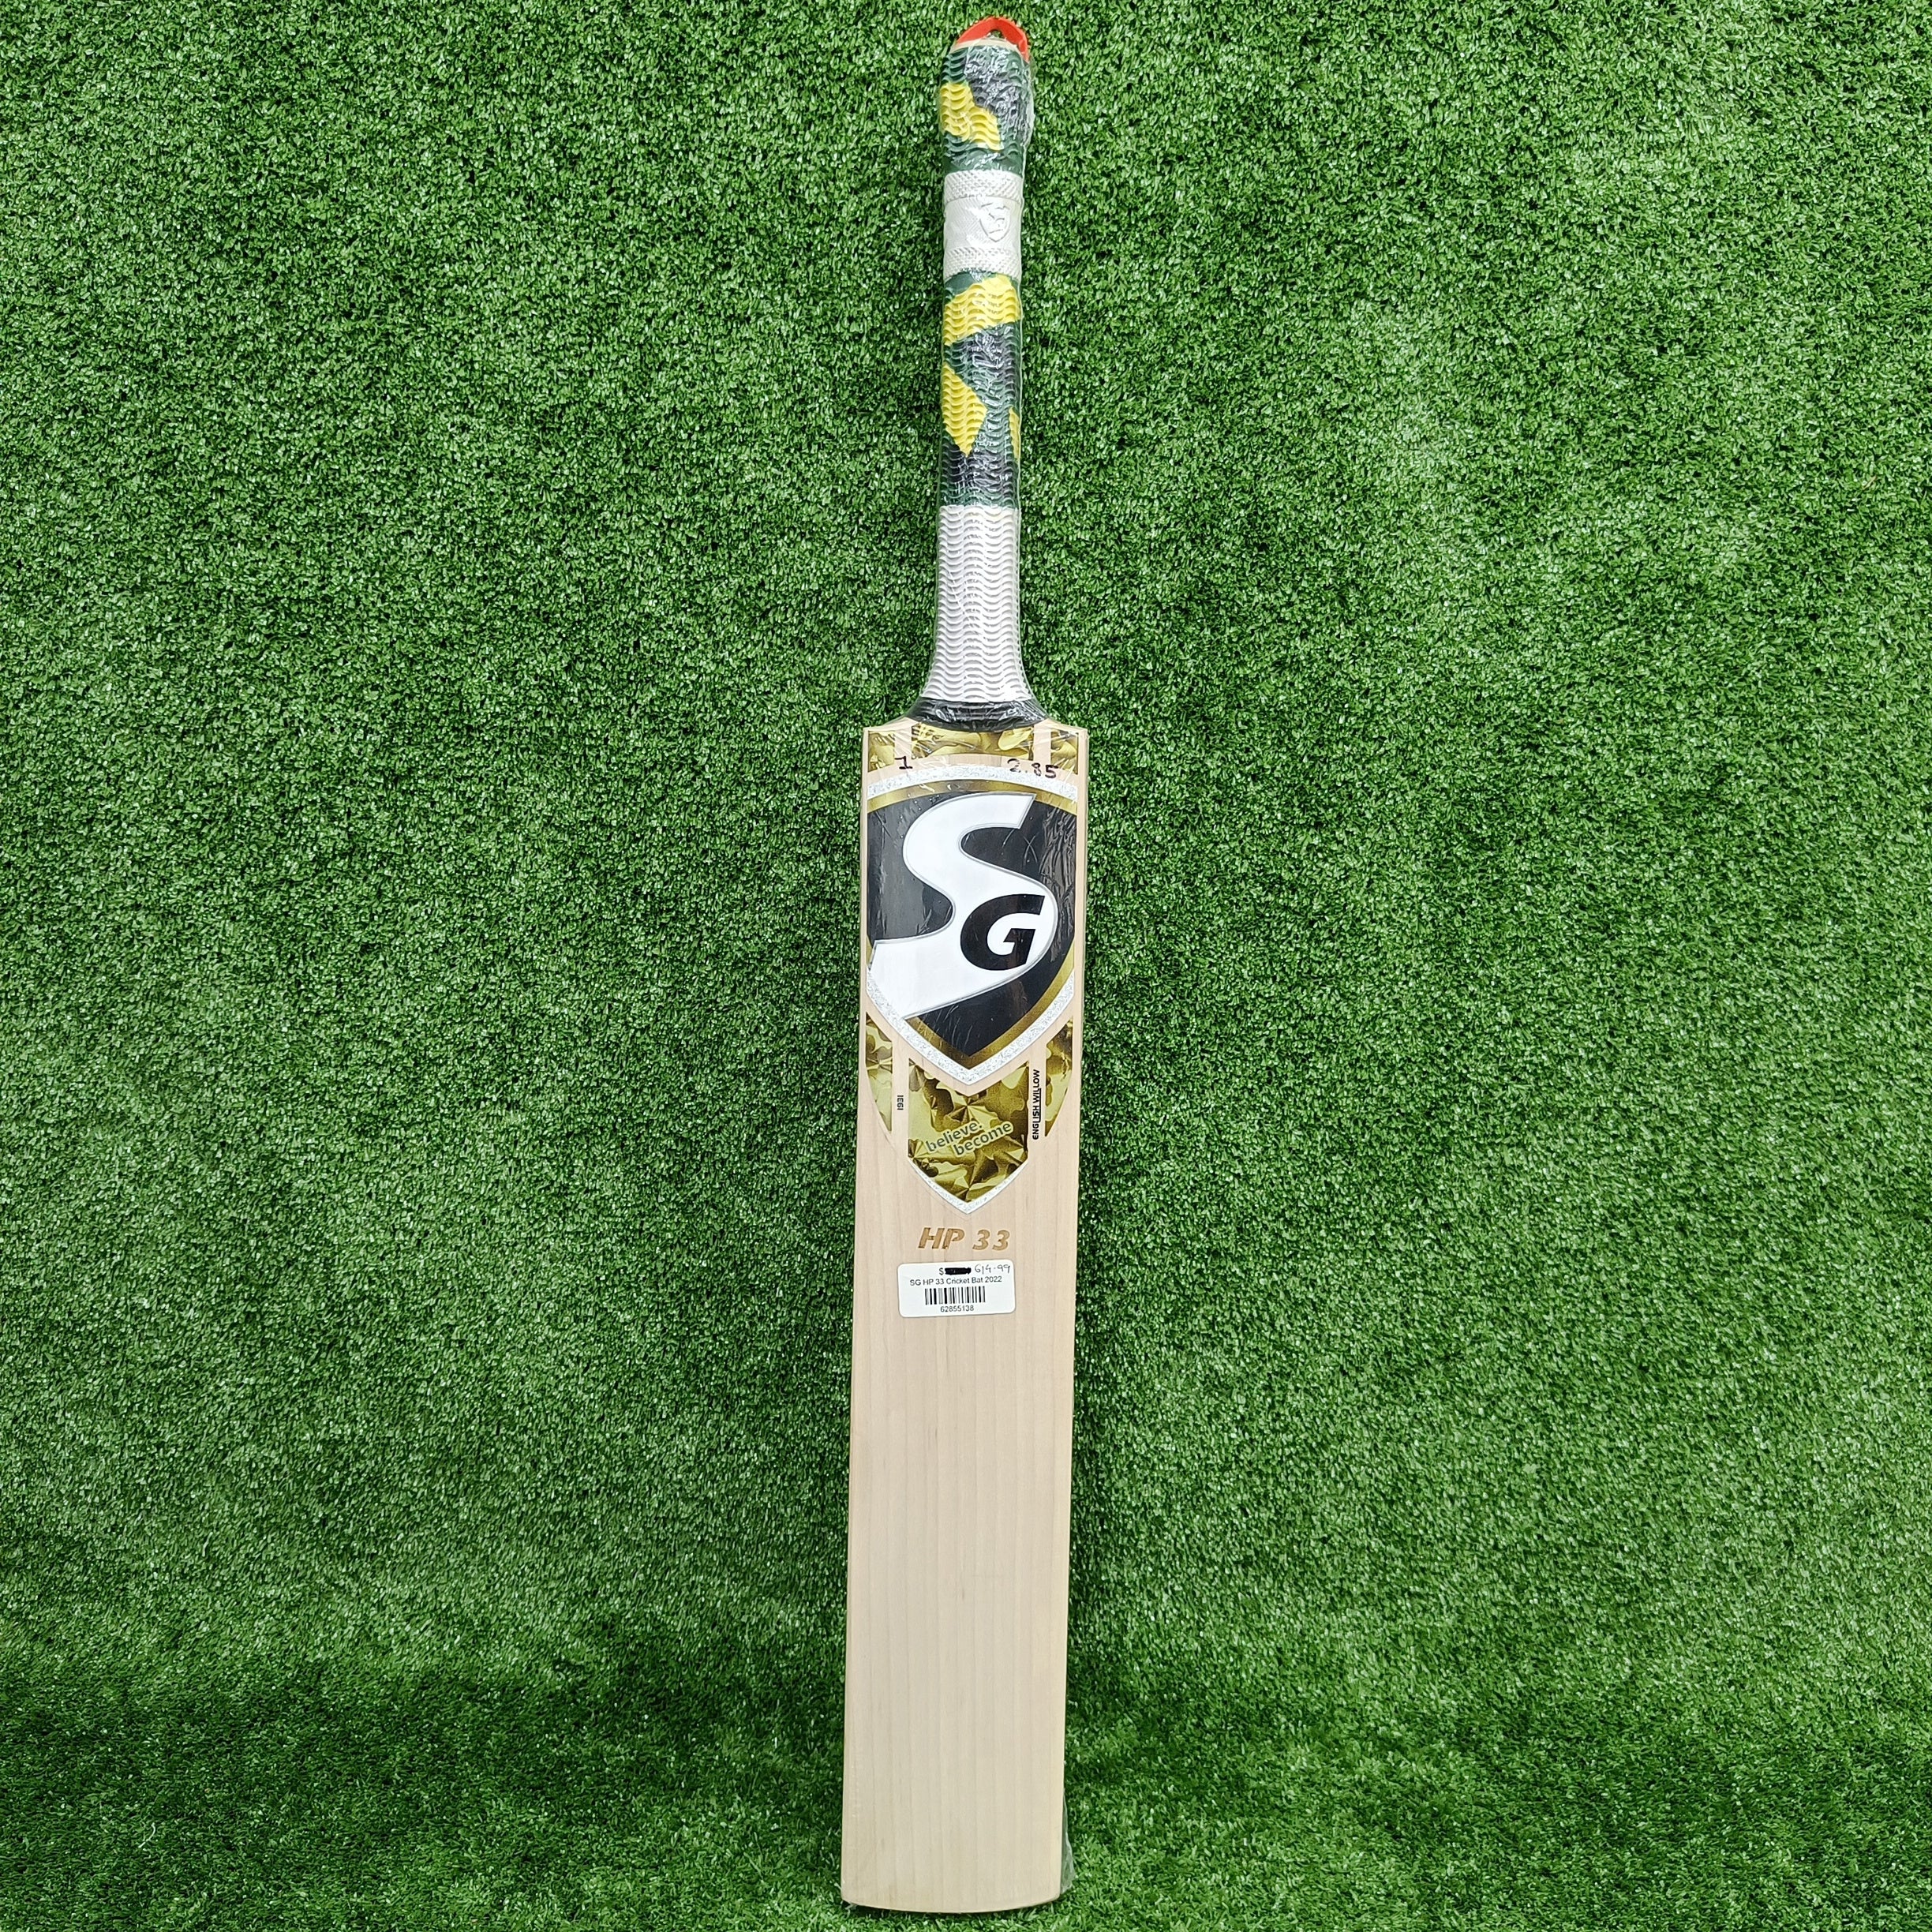 SG Hardik Pandya HP 33 Original Players Cricket Bat